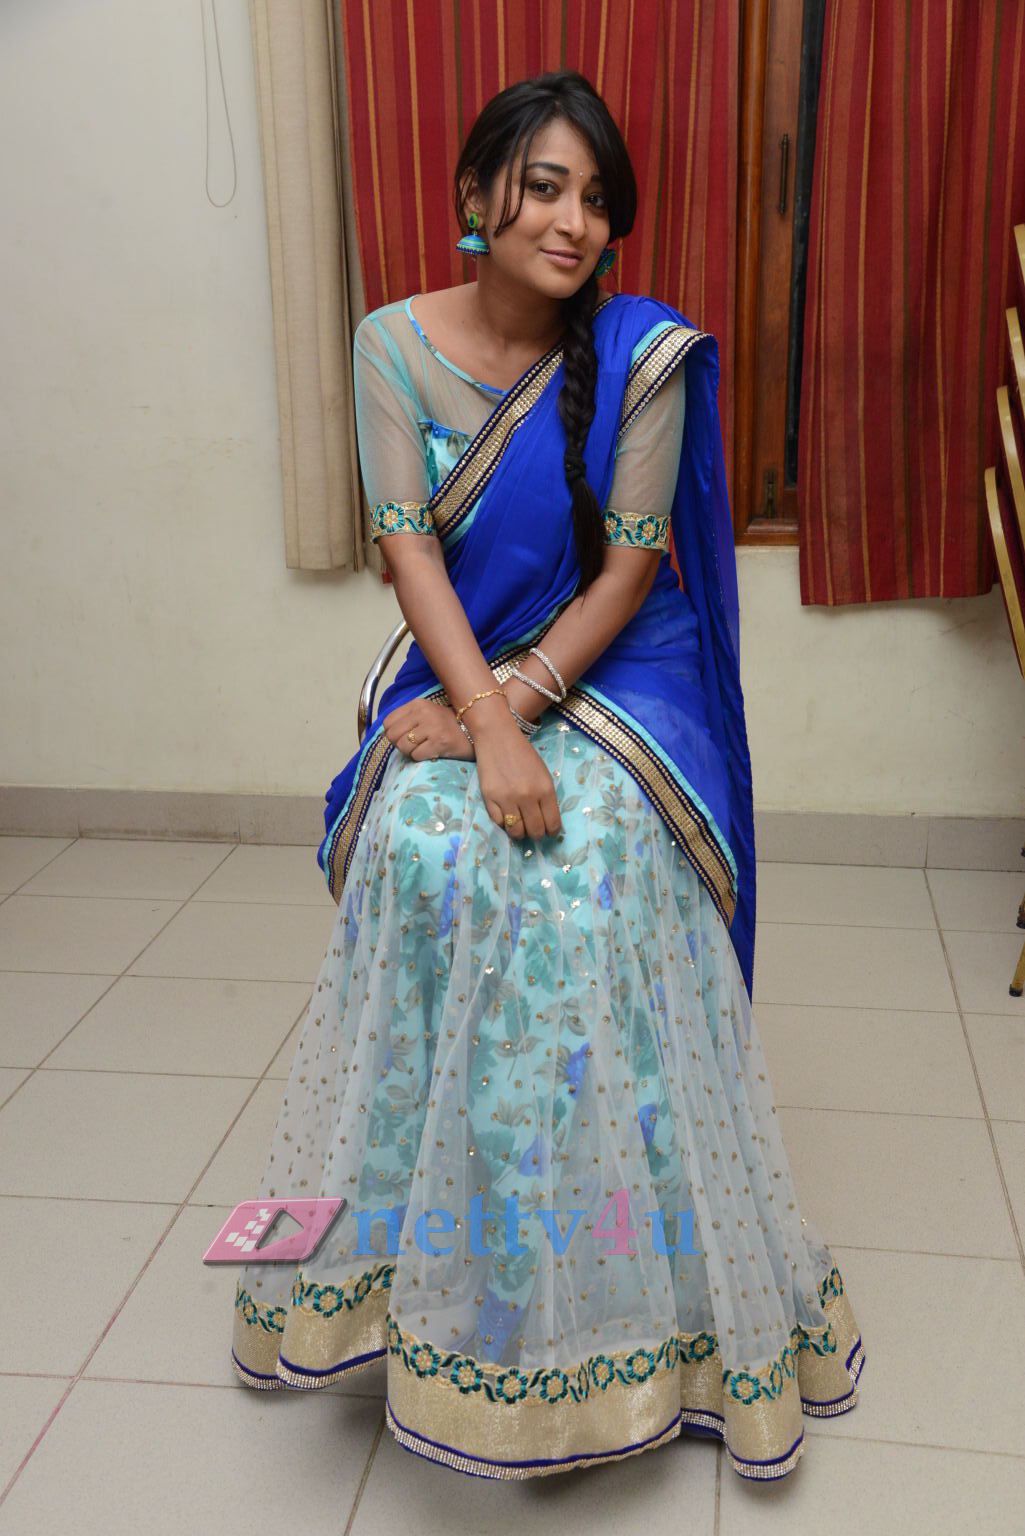 telugu actress bhavya sree cute photo gallery 51